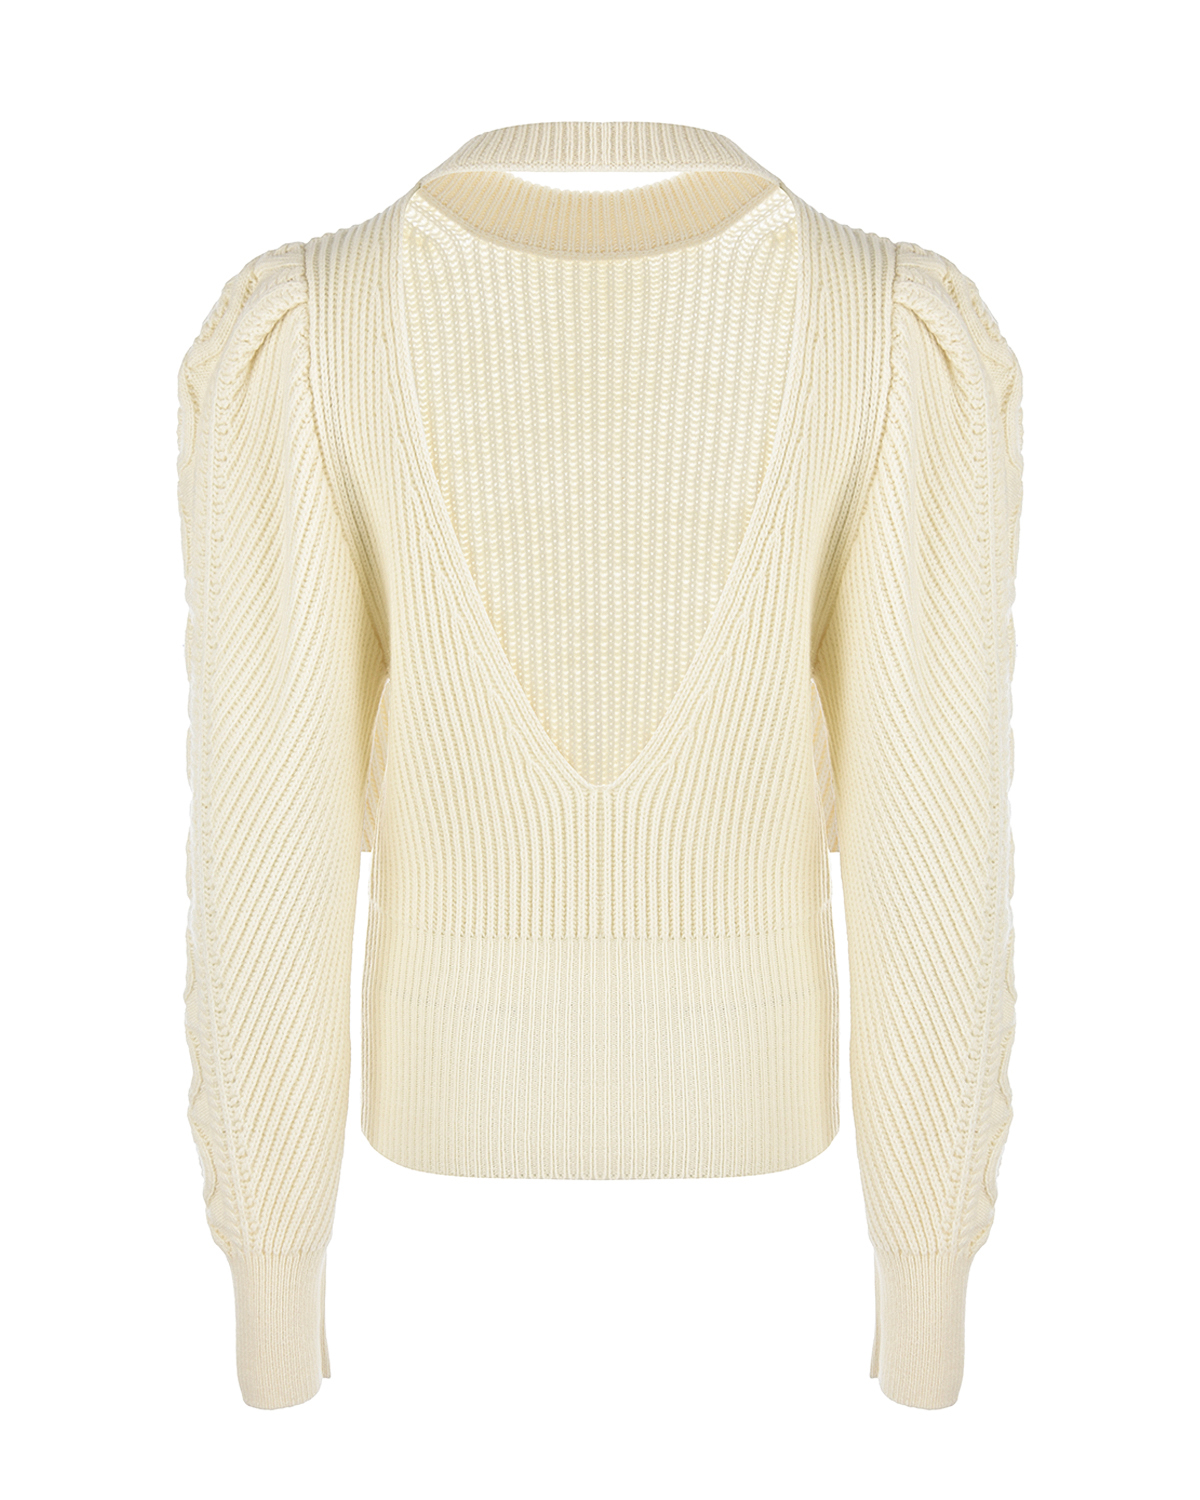 Джемпер молочного цвета с объемными рукавами Forte dei Marmi Couture, размер 40 - фото 5